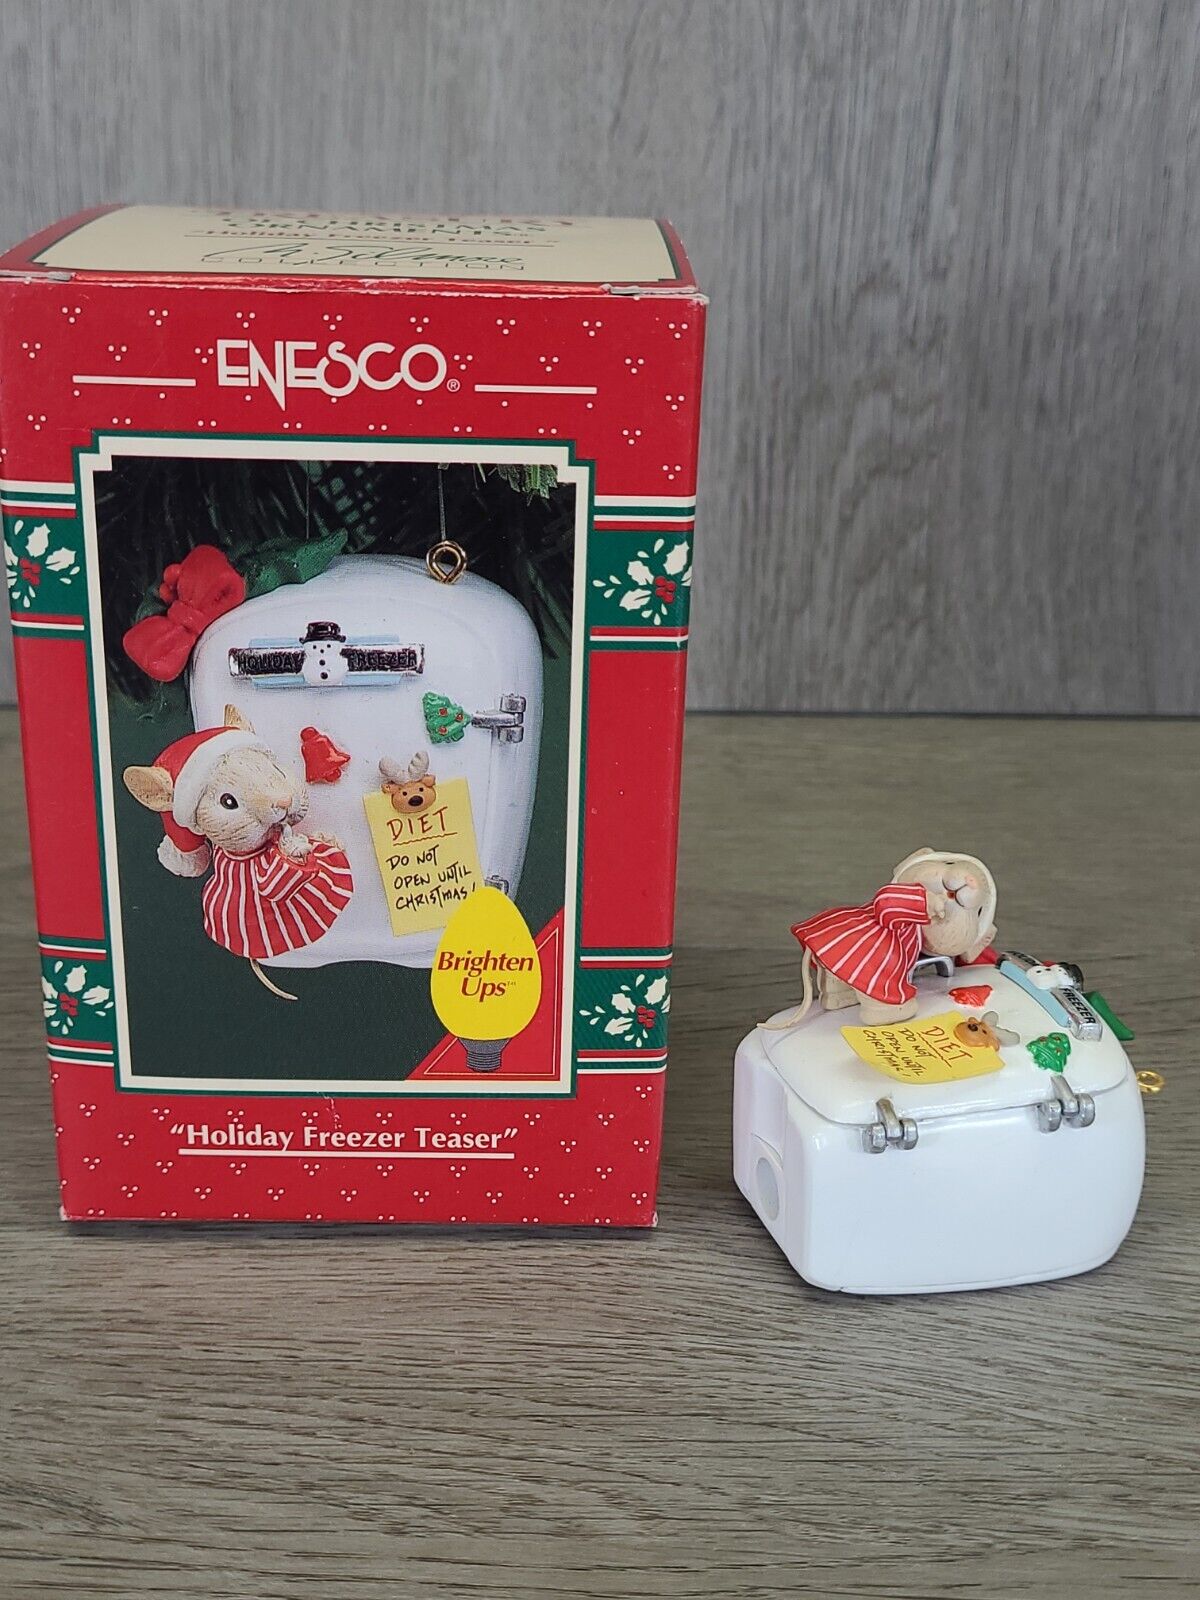 1994 Enesco Ornament “Holiday Freezer Teaser” Brighten Ups